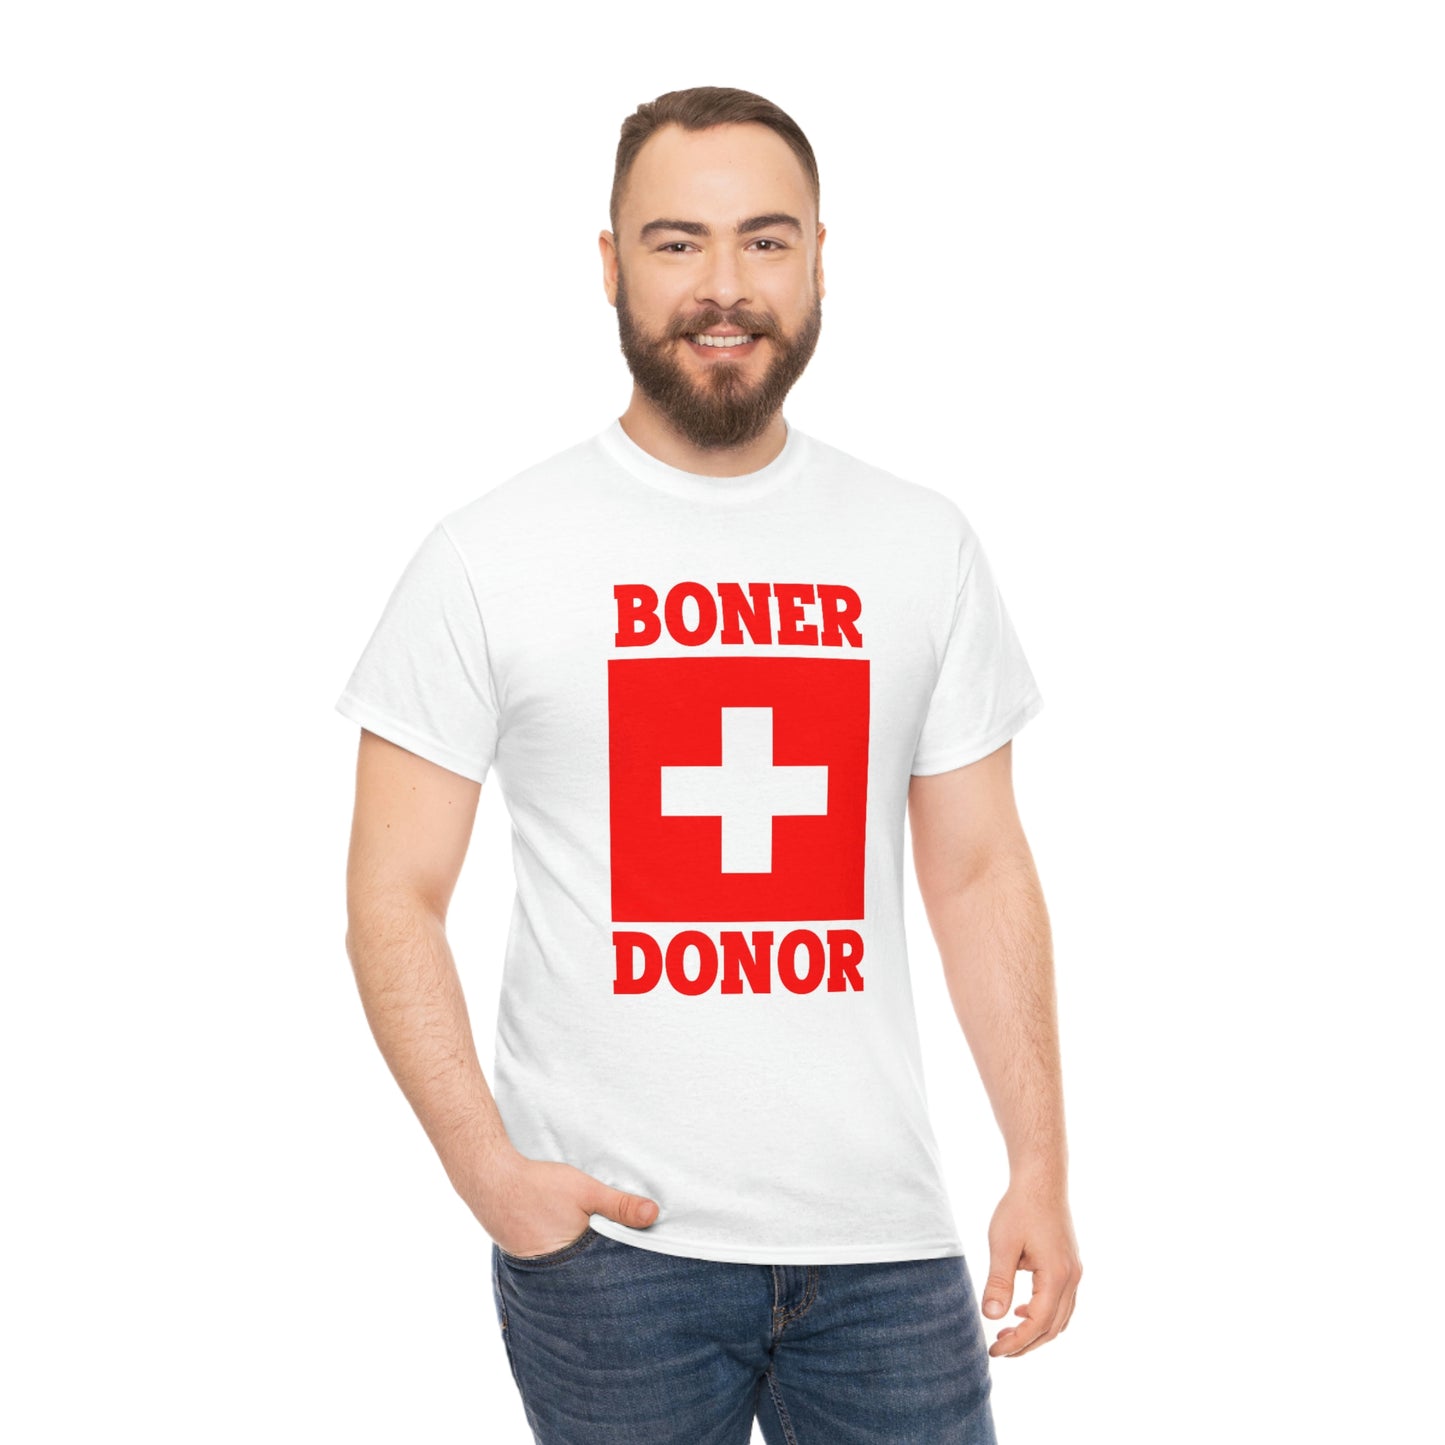 BONER DONOR T-SHIRT